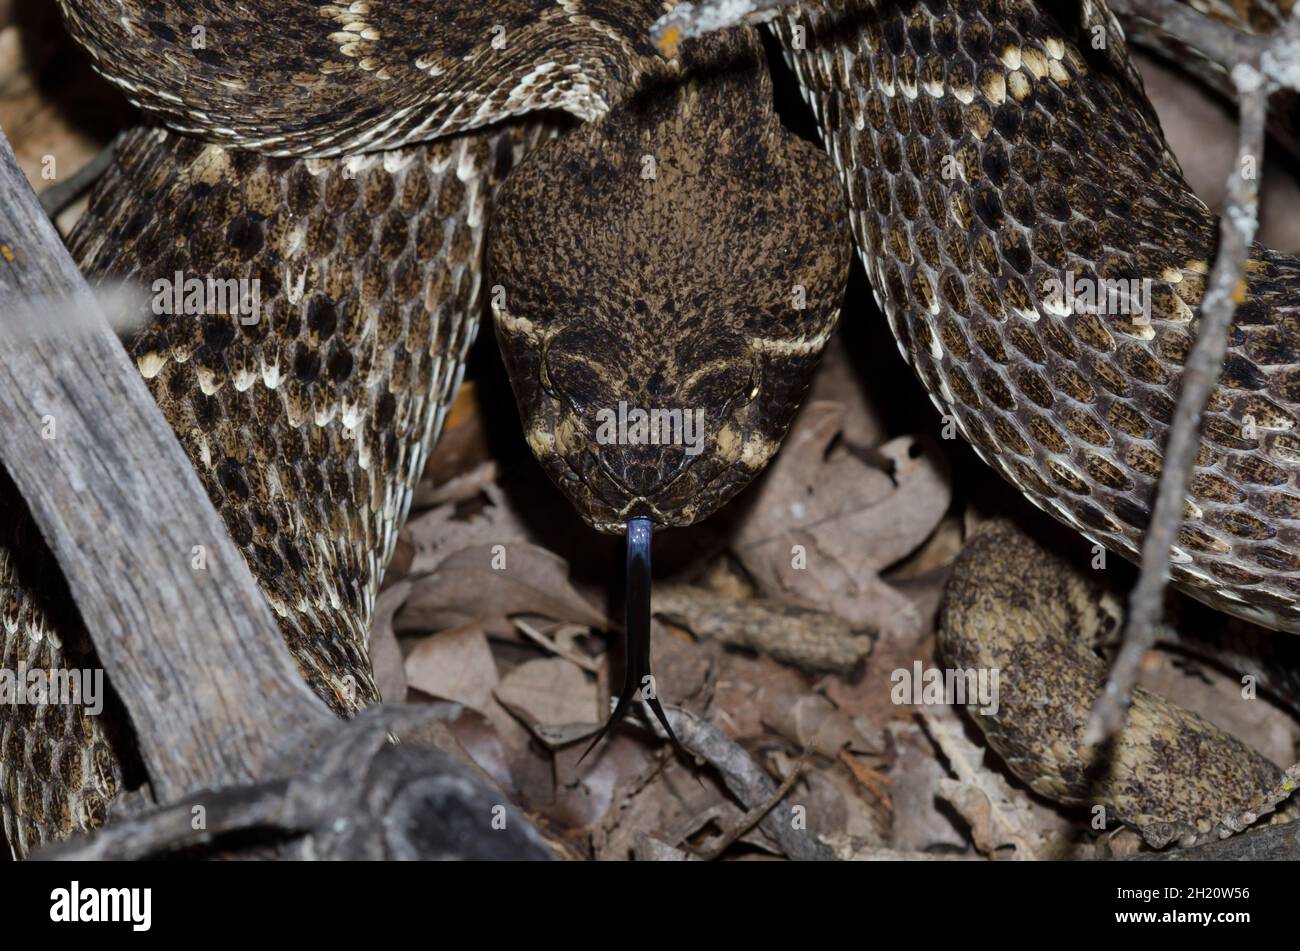 Western Diamondback Rattlesnake, Crotalus atrox, flicking tongue Stock Photo